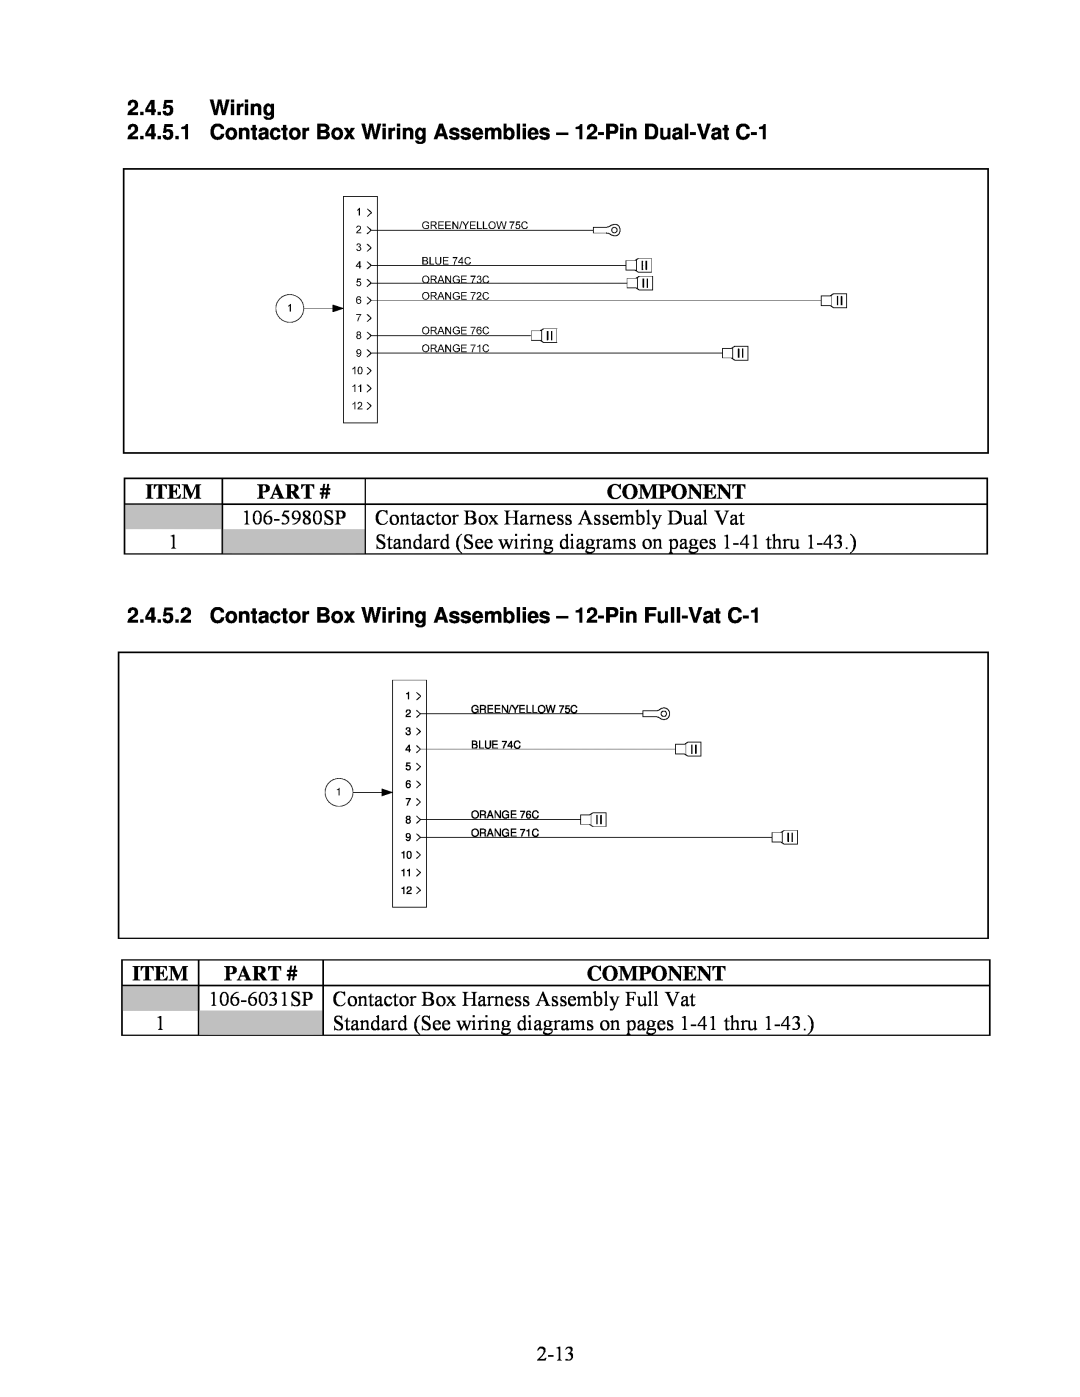 Frymaster BIELA14 manual 2.4.5Wiring, COMPONENT Contactor Box Harness Assembly Dual Vat, Item Part #, Component 